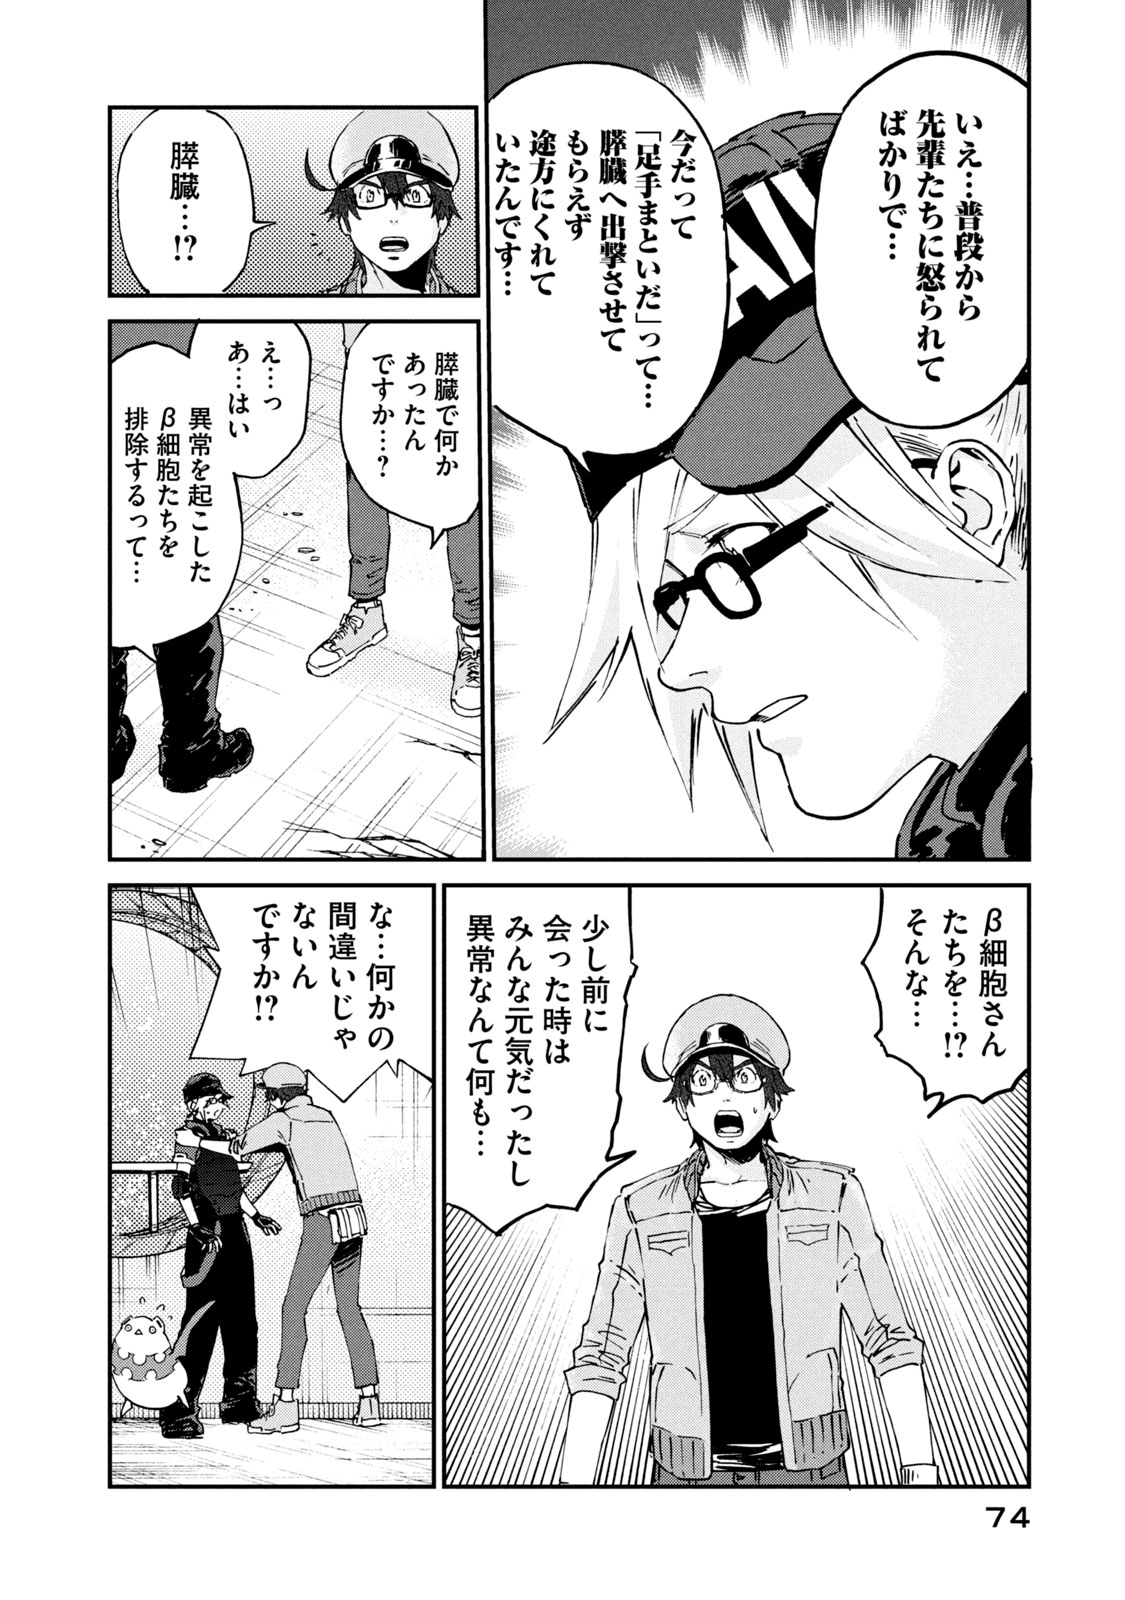 Hataraku Saibou BLACK - Chapter 45 - Page 10